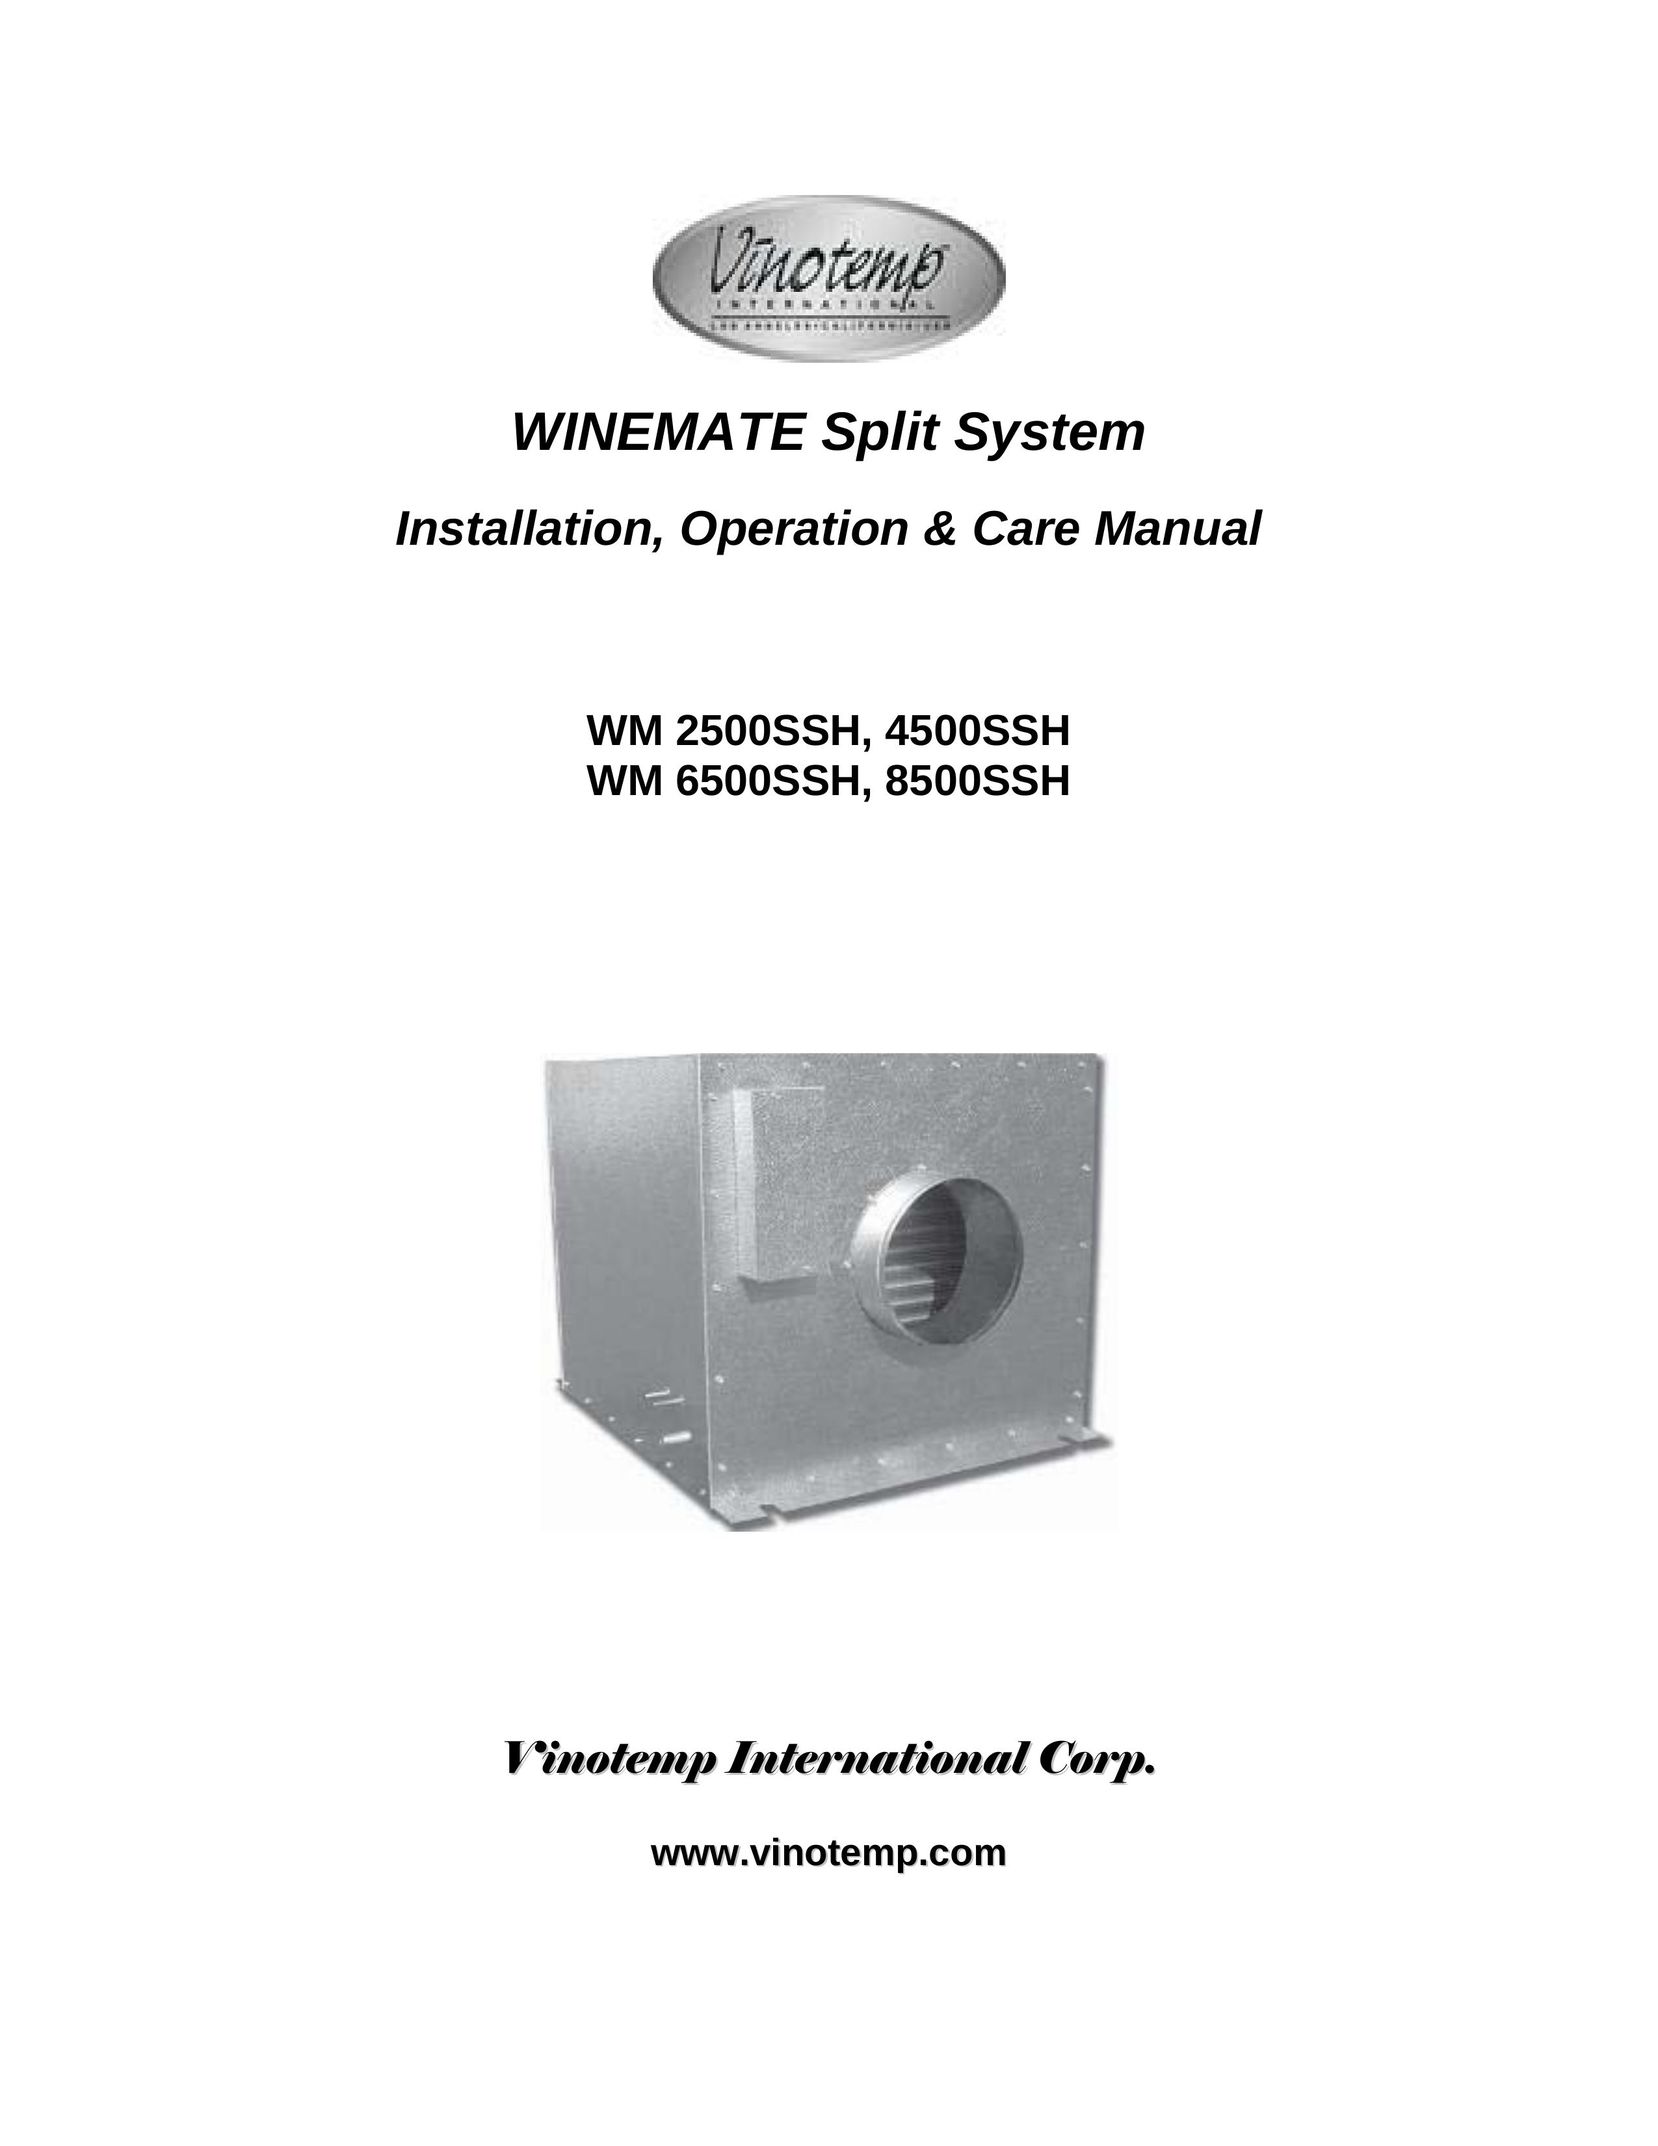 Vinotemp WM 2500SSH Air Conditioner User Manual